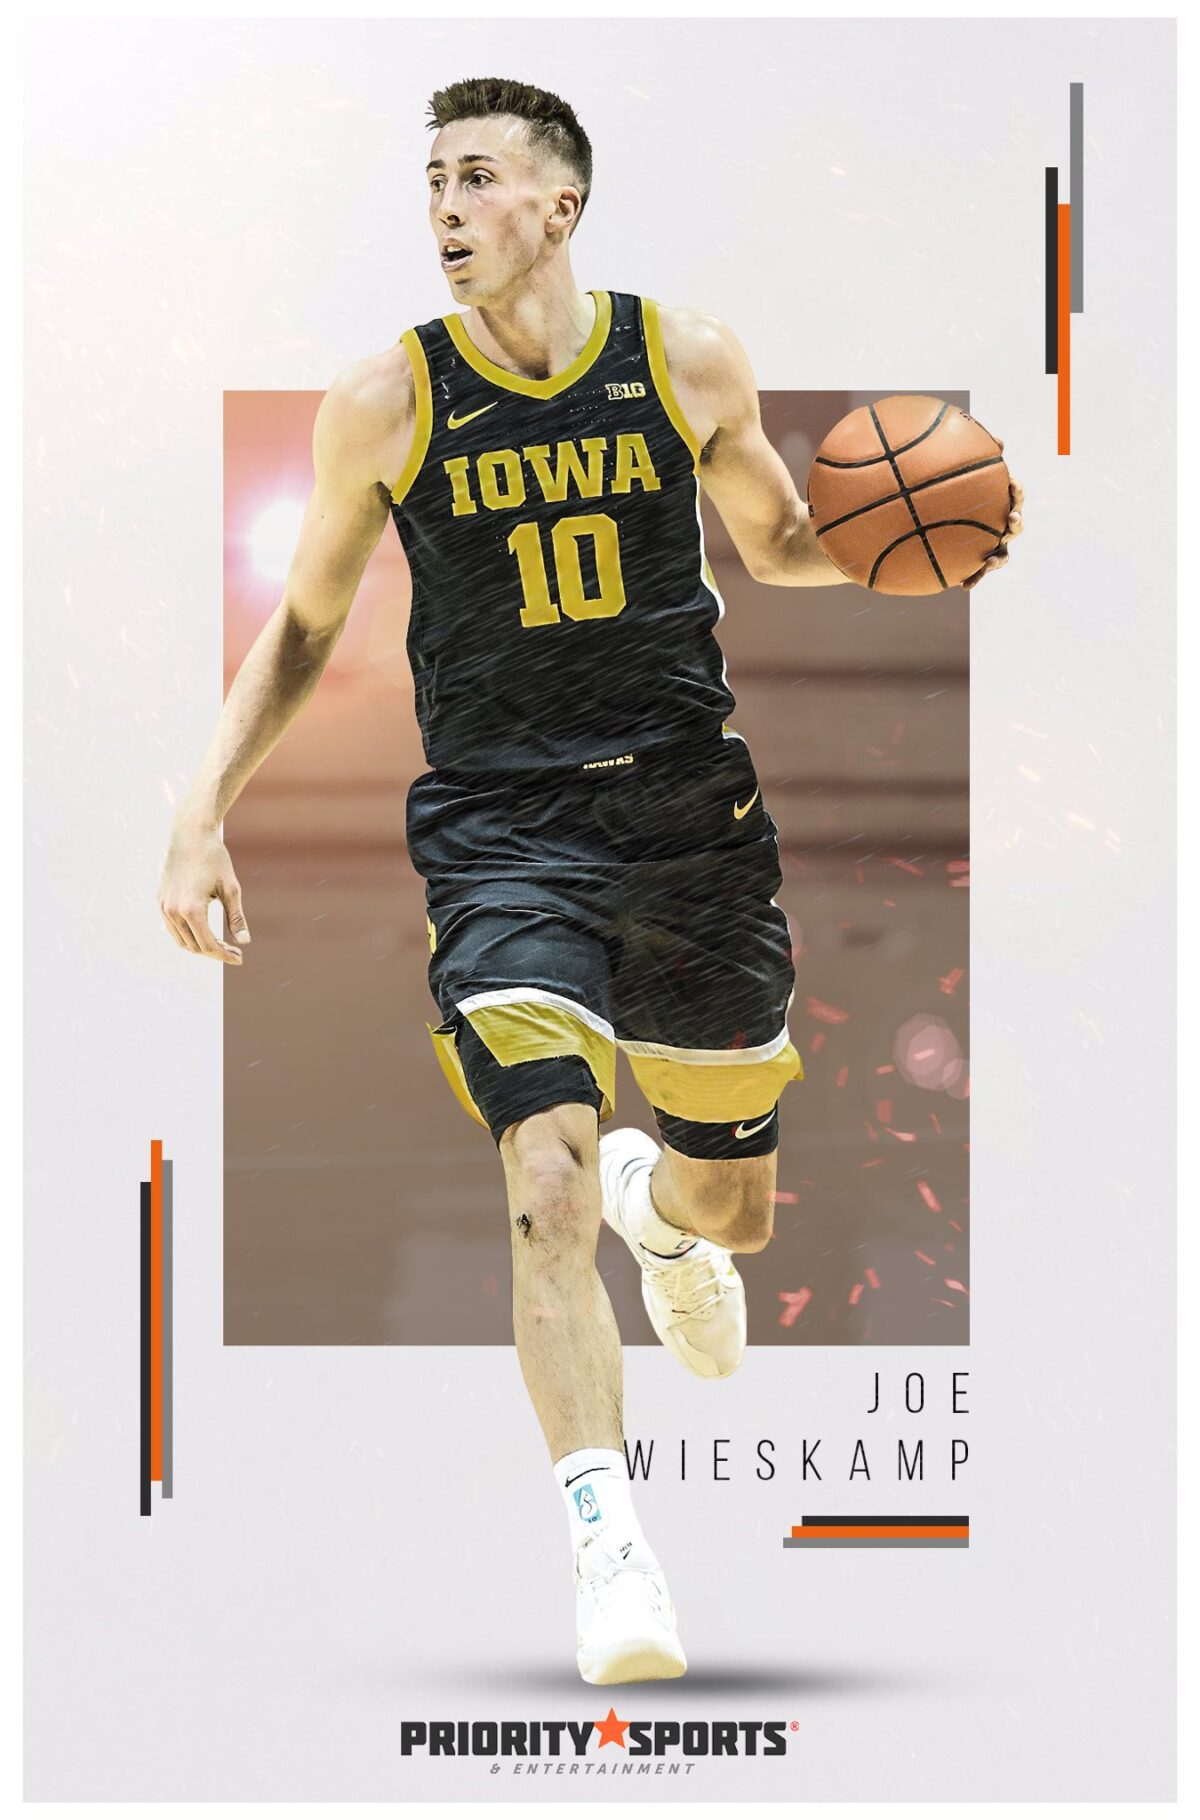 Could Iowa's Joe Wieskamp Be An NBA First Round Draft Pick?